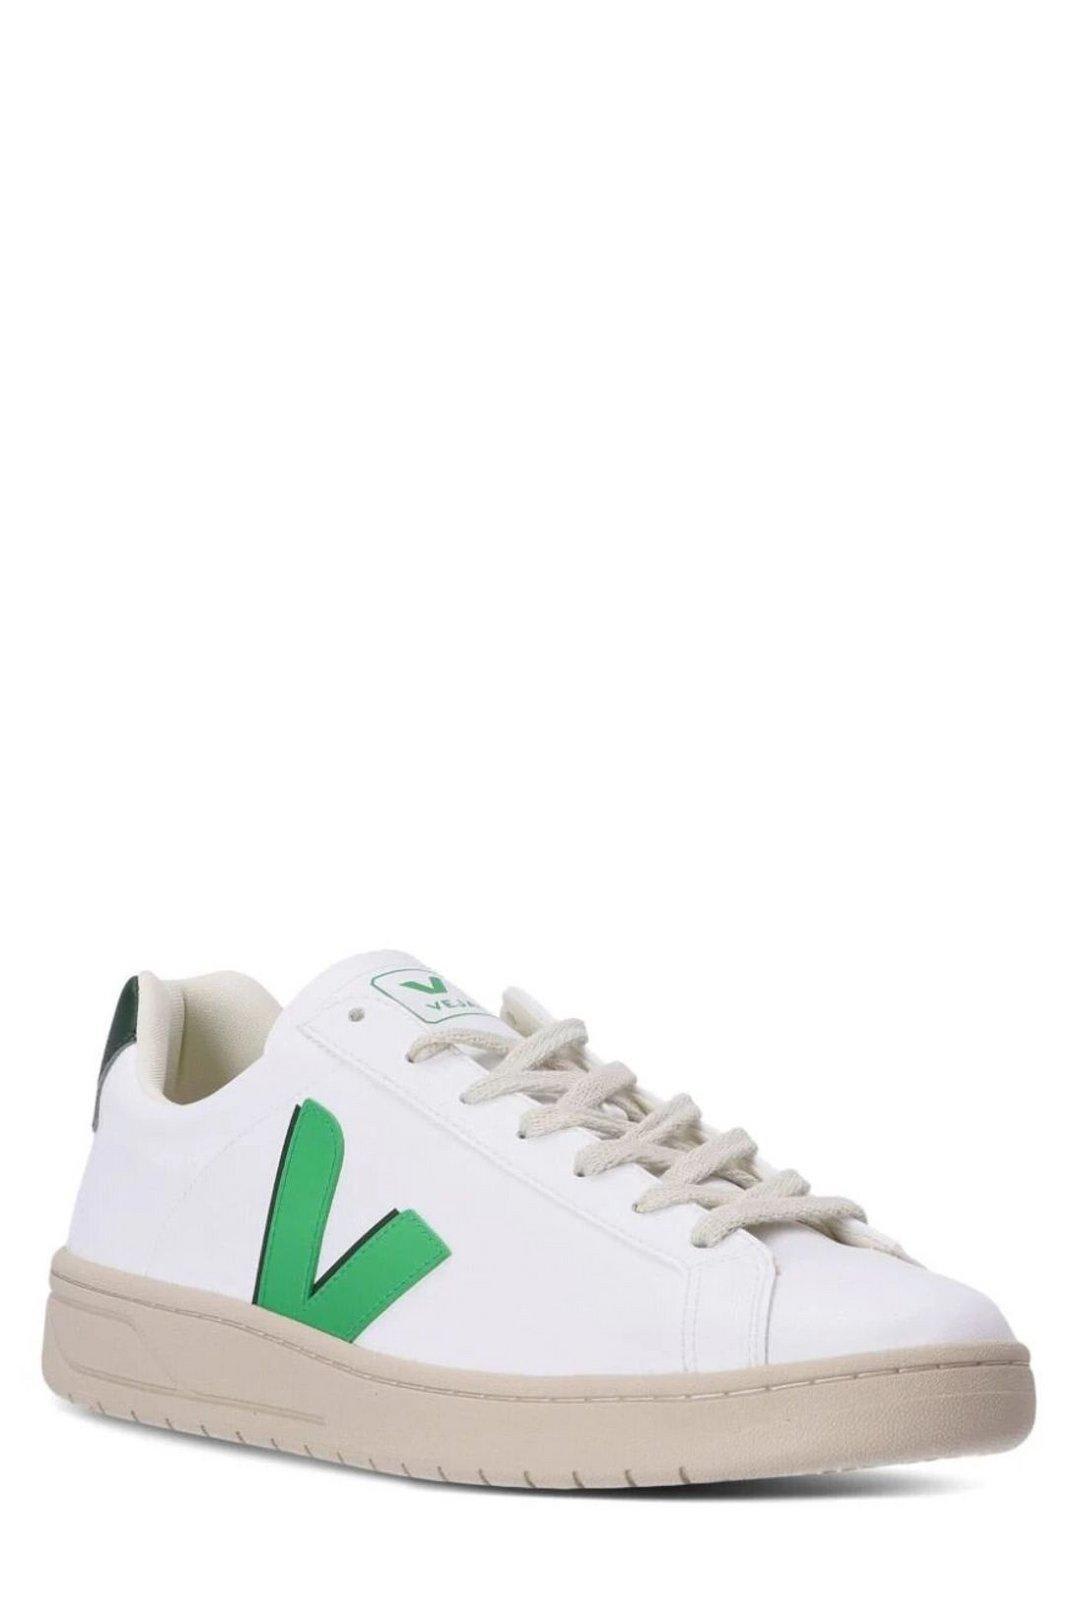 Shop Veja Ucra Cwl Low-top Sneakers In White/green